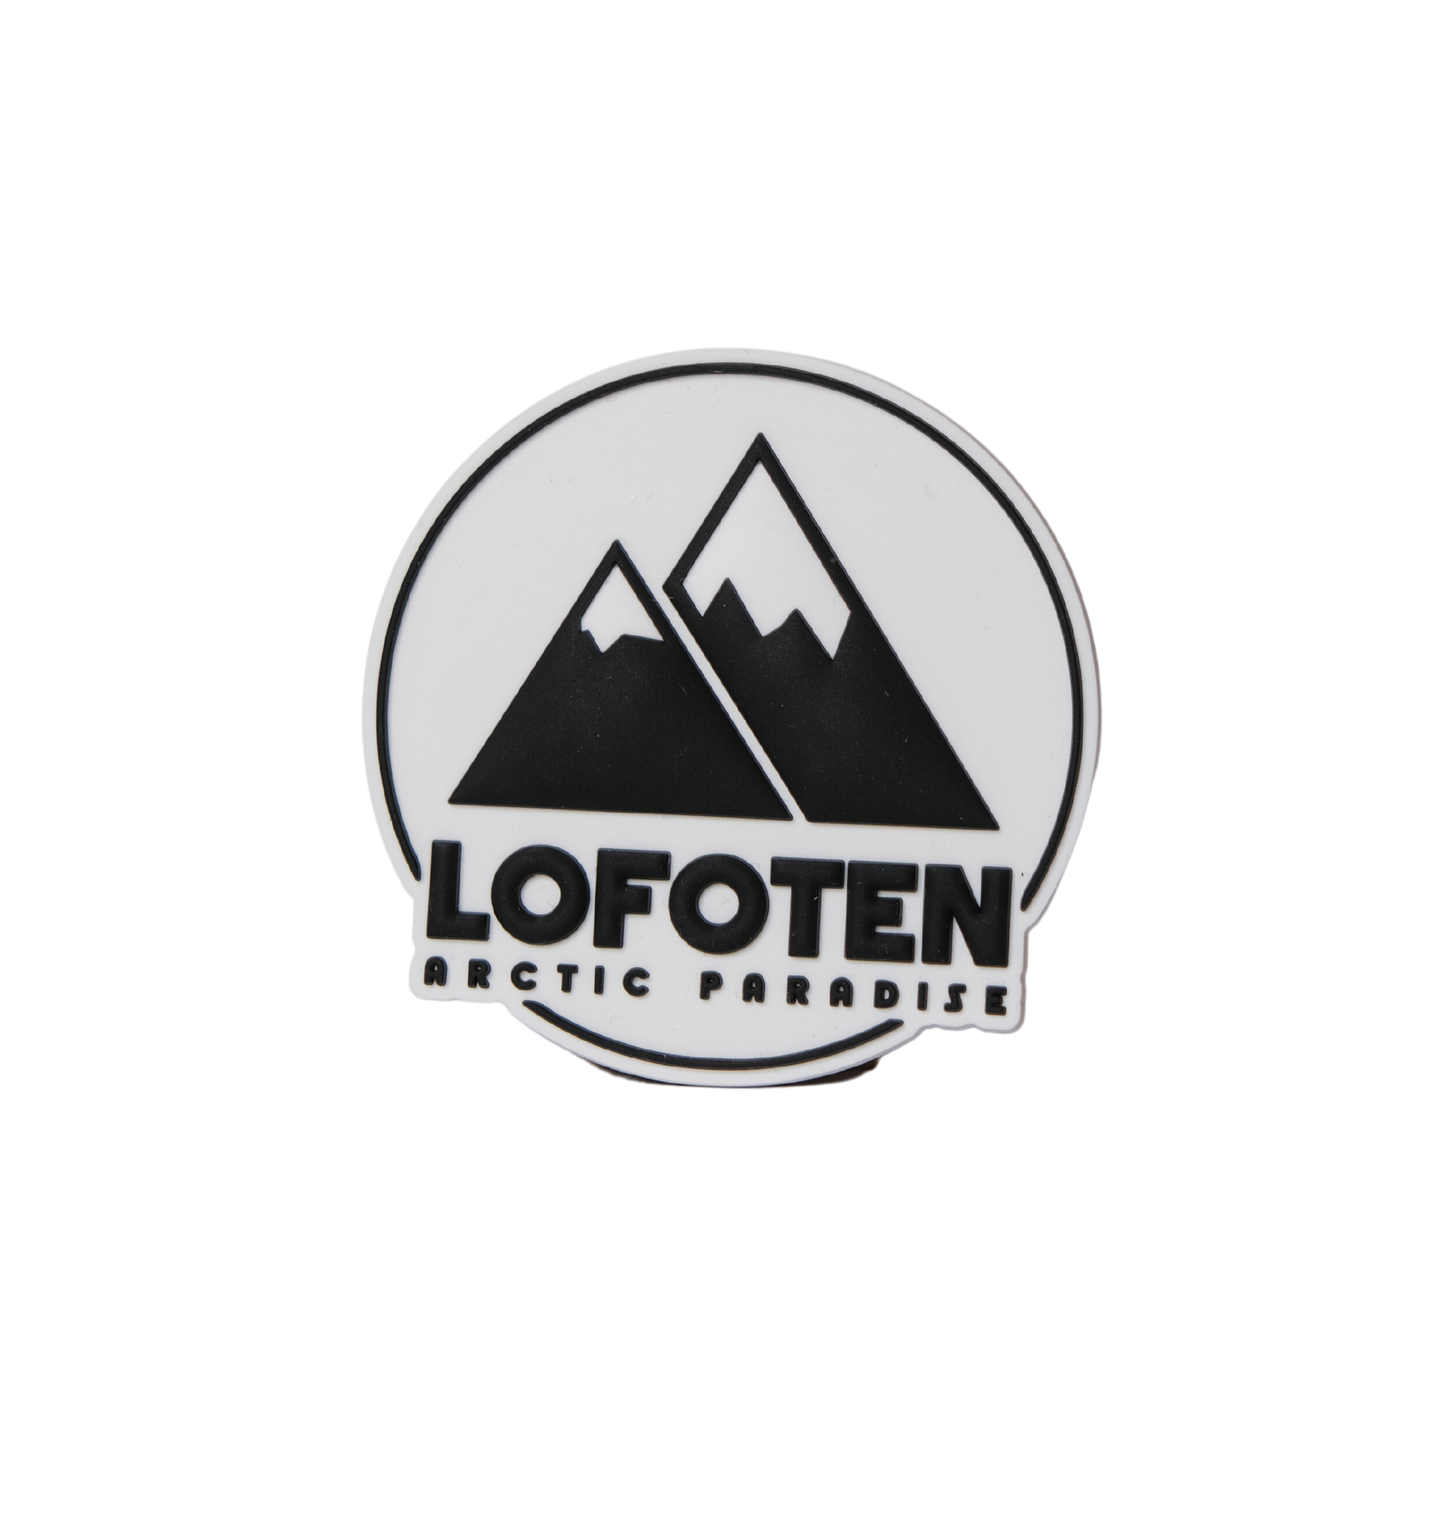 Lofoten sticker, mountains